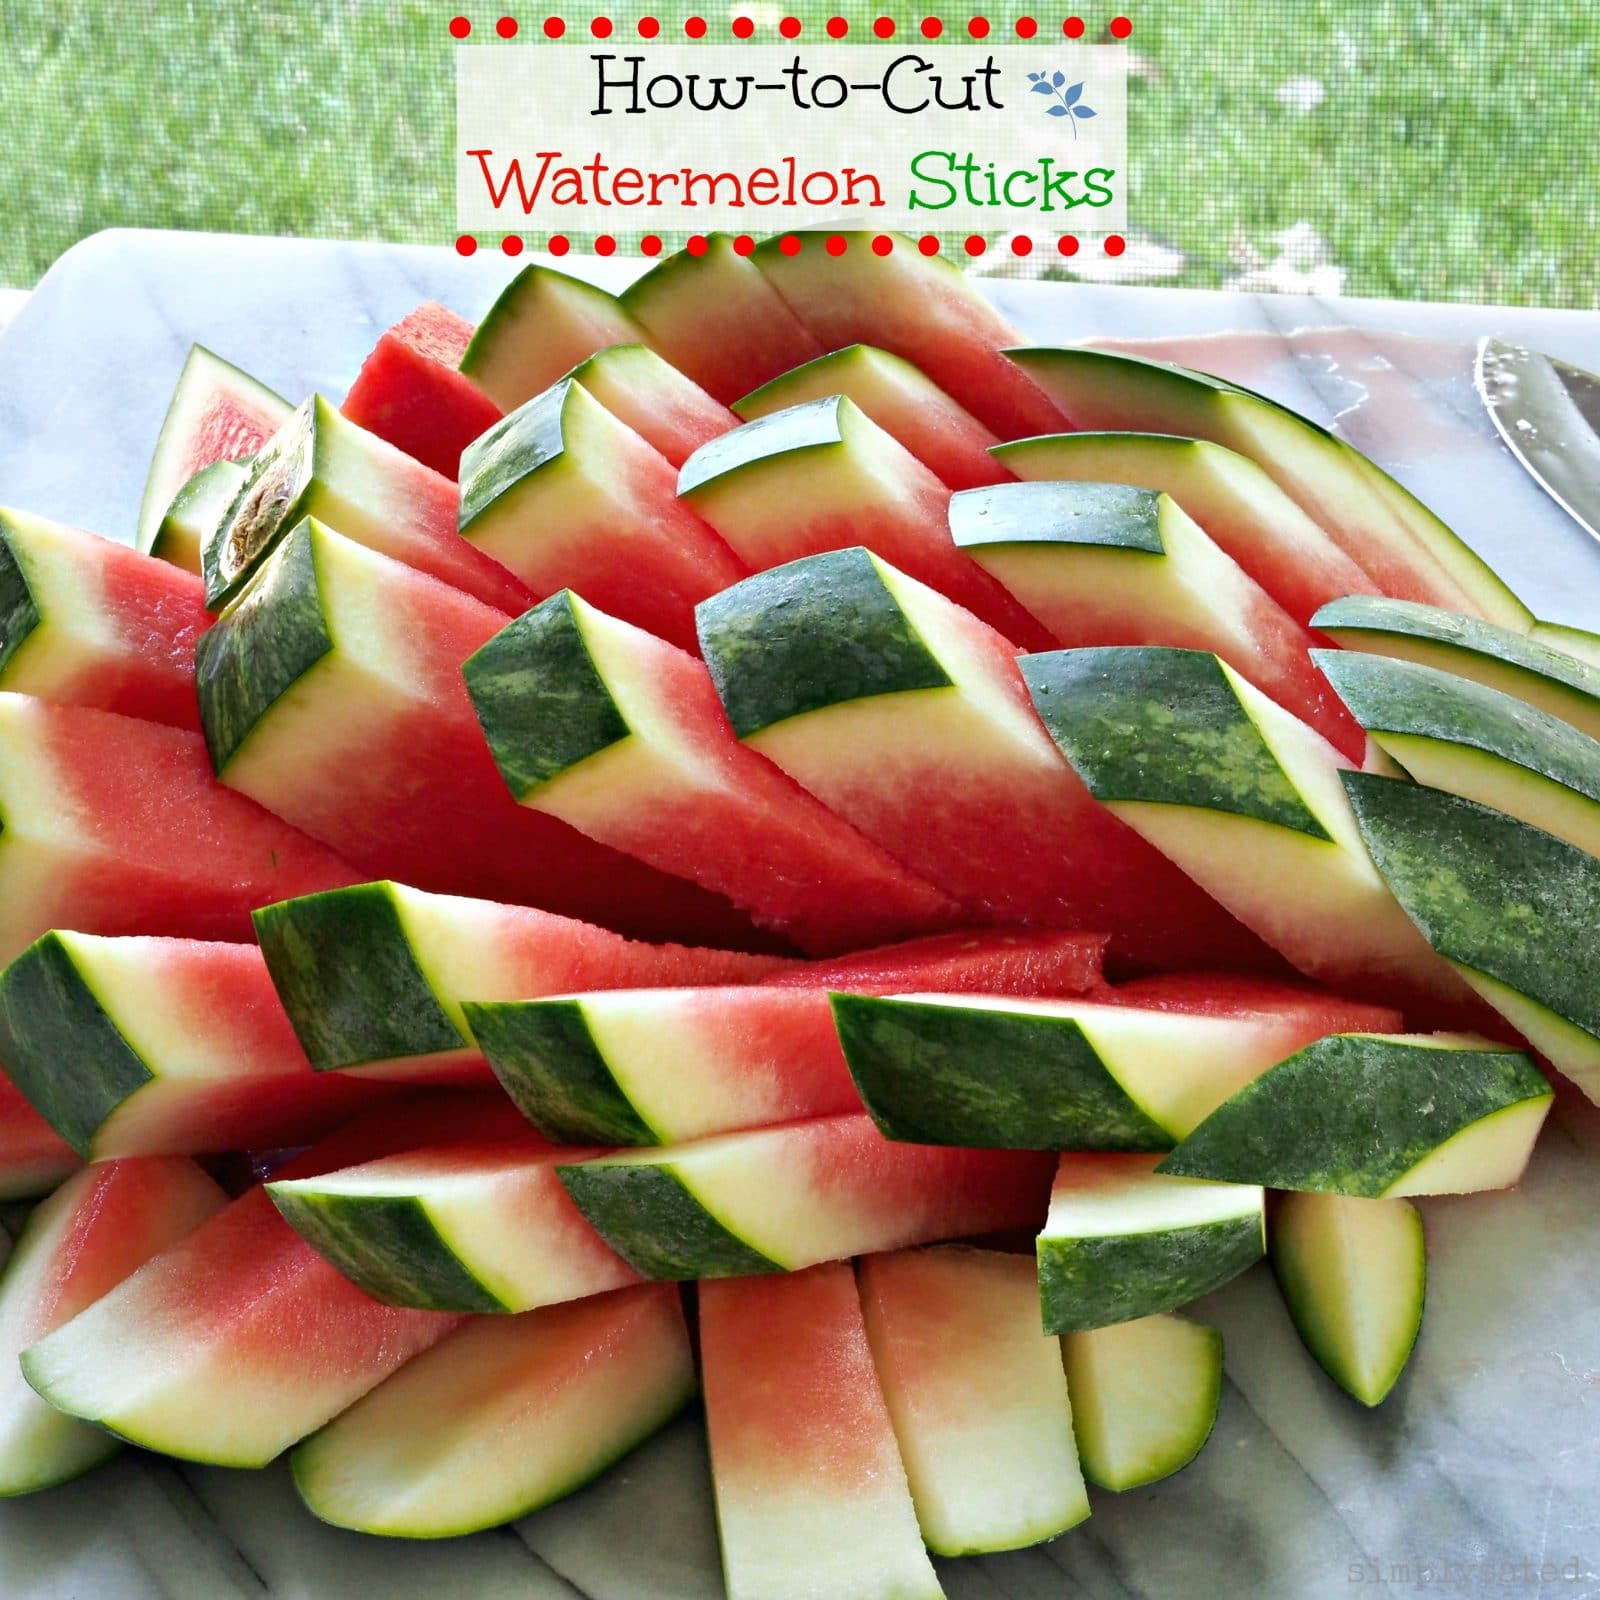 How-to-Cut Watermelon Sticks